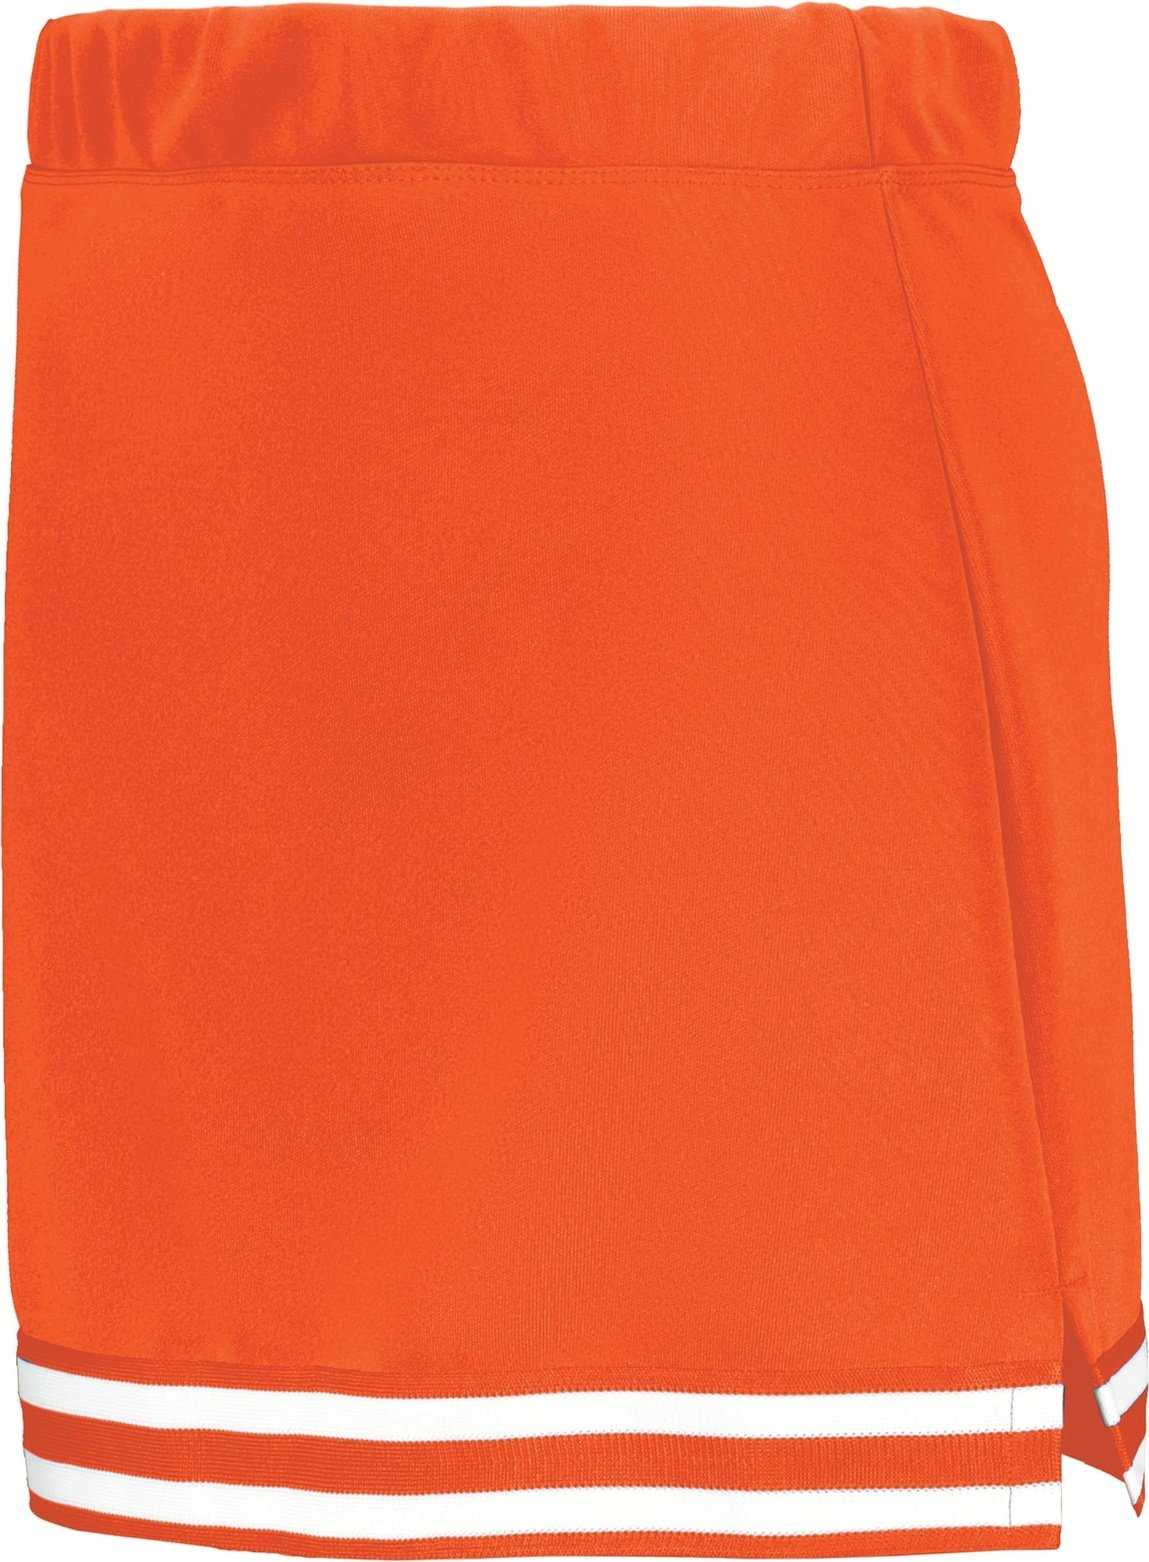 Augusta 6925 Ladies Cheer Squad Skirt - Orange Orange White - HIT a Double